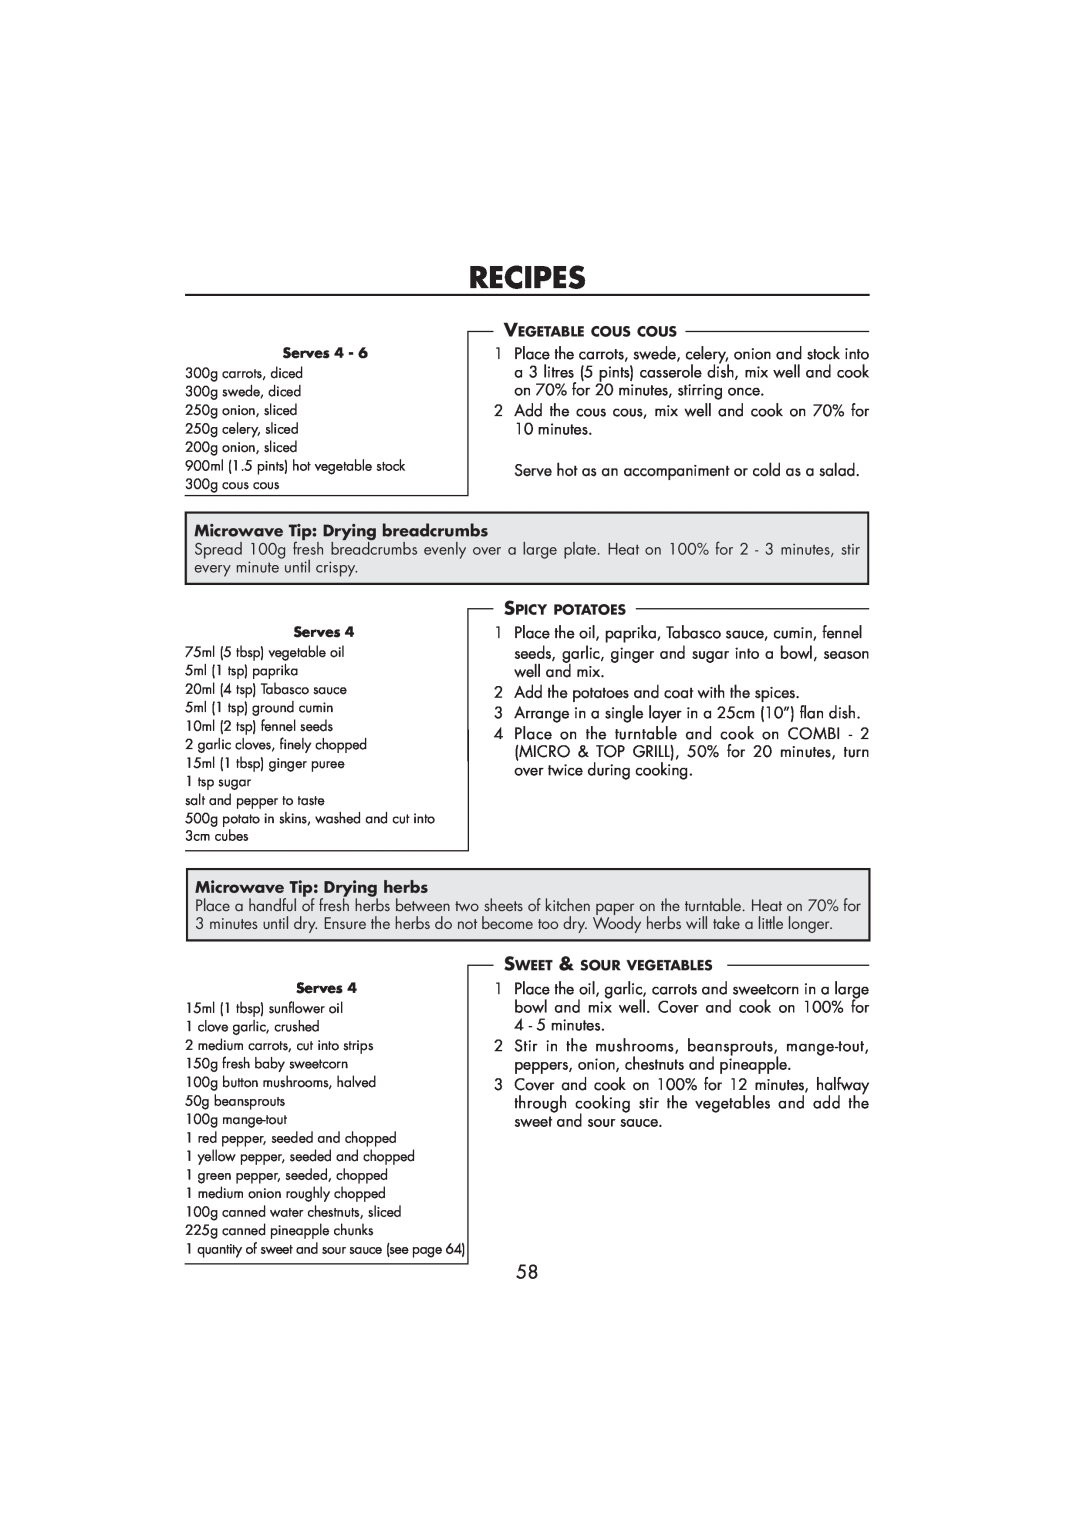 Sharp R-890SLM operation manual Recipes, Microwave Tip Drying breadcrumbs, Microwave Tip Drying herbs 